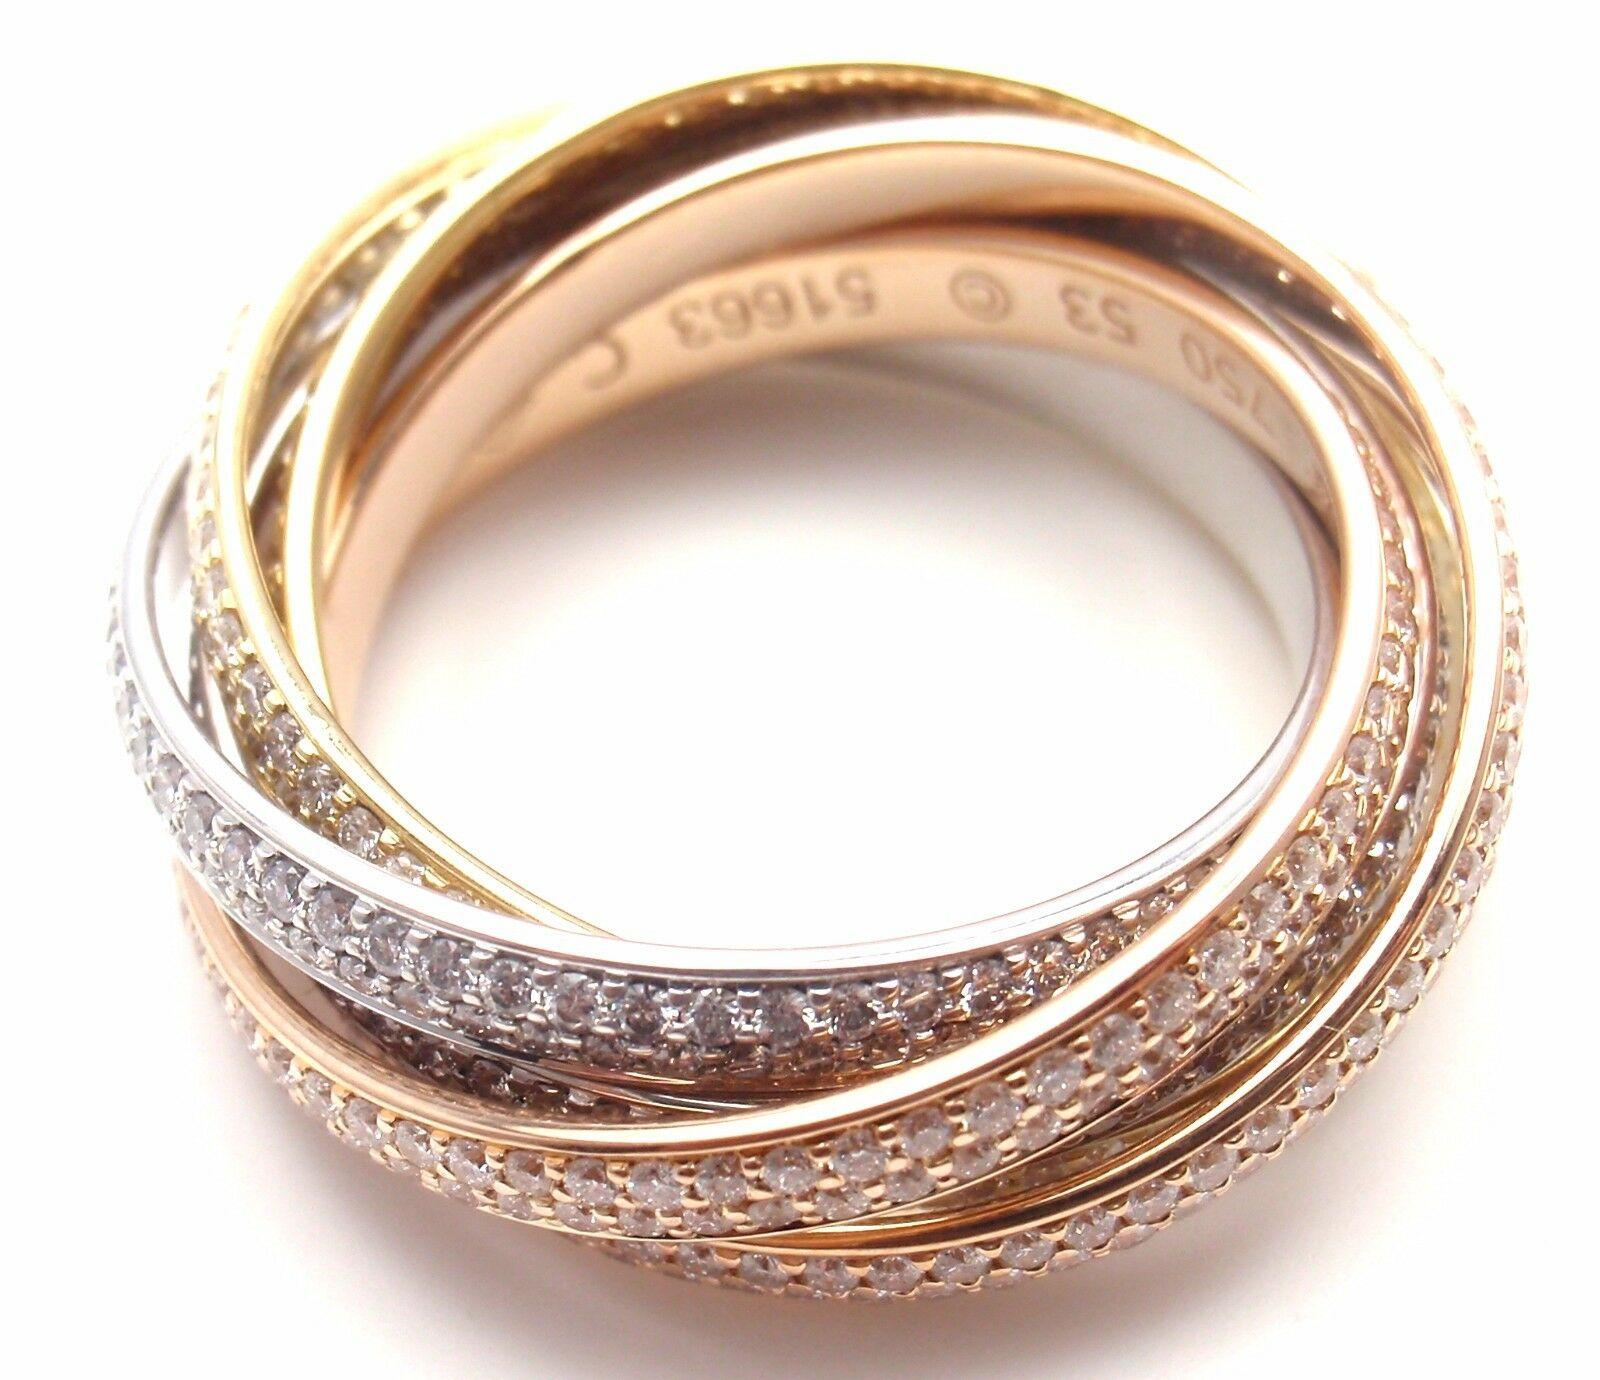 1902 18k gold ring worth